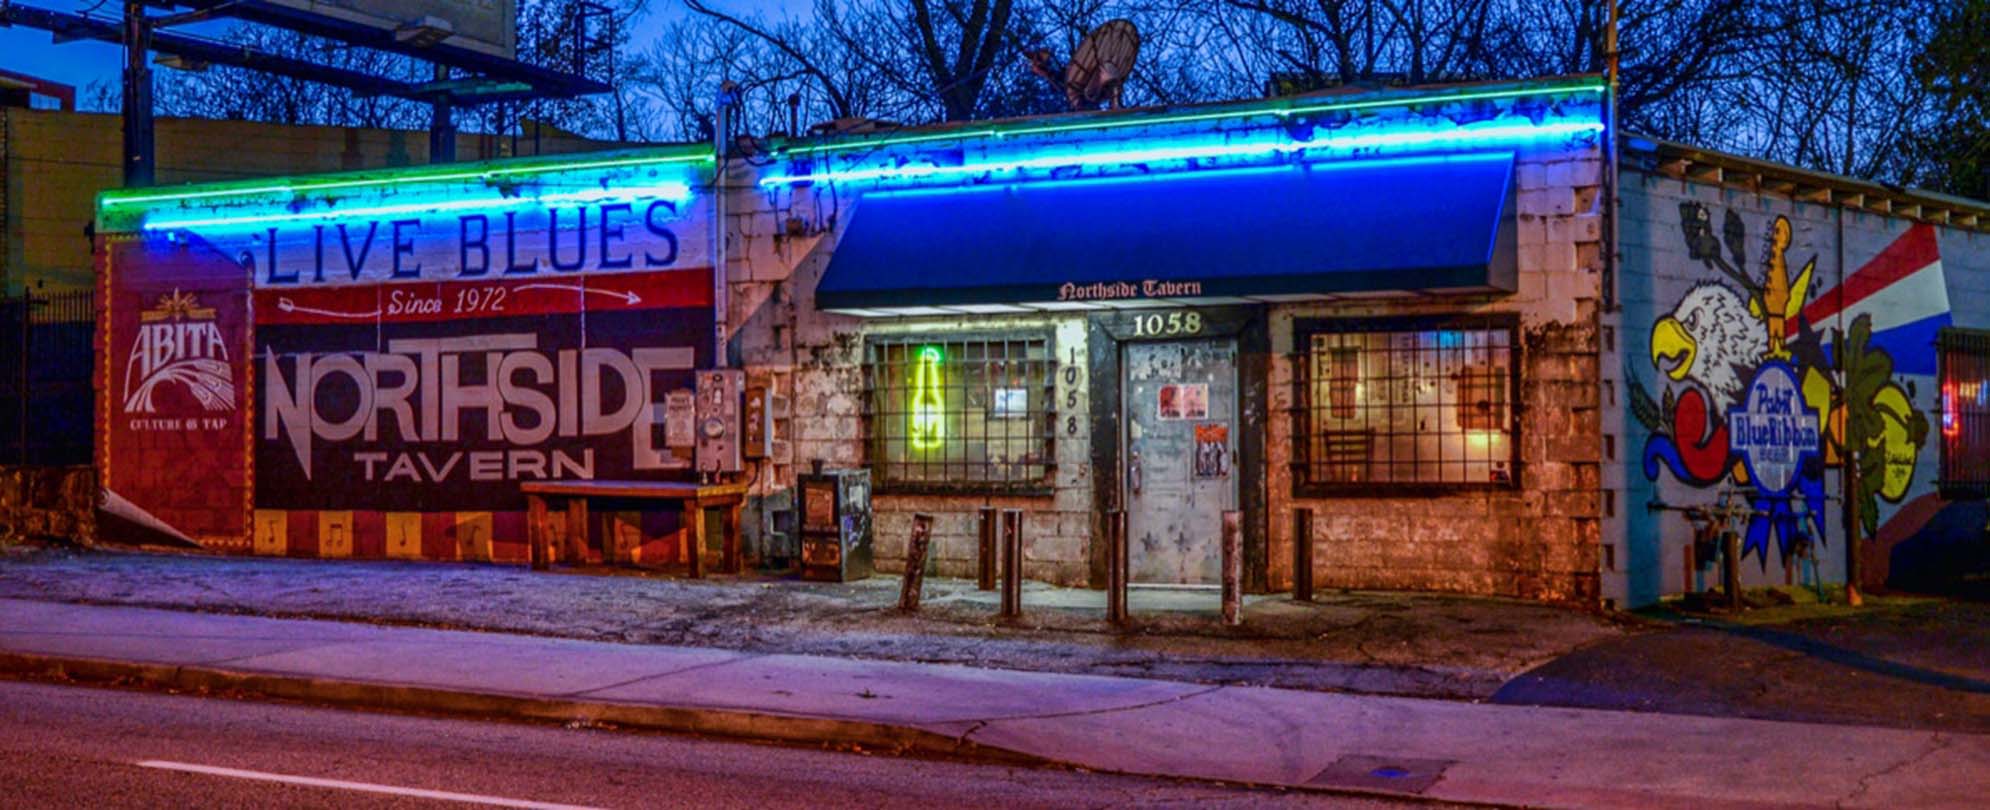 Northside Tavern in Atlanta, Georgia.